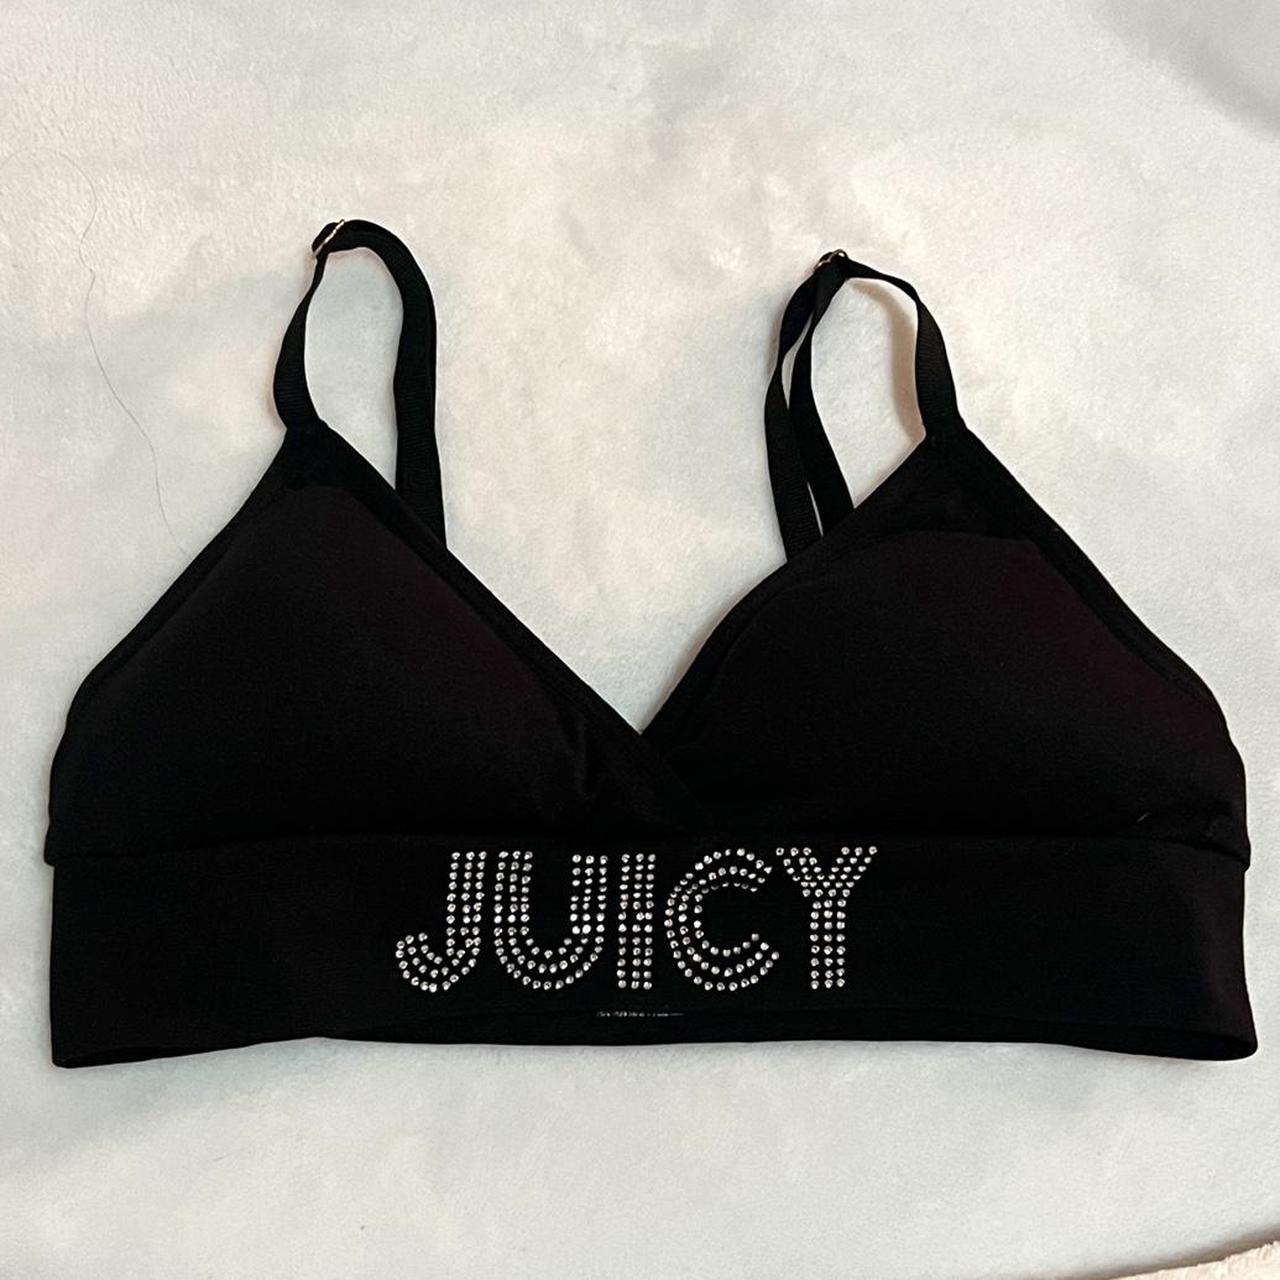 Juicy Couture SNAKE PRINT BRALETTE - Medium support sports bra - black  snake print/black - Zalando.de